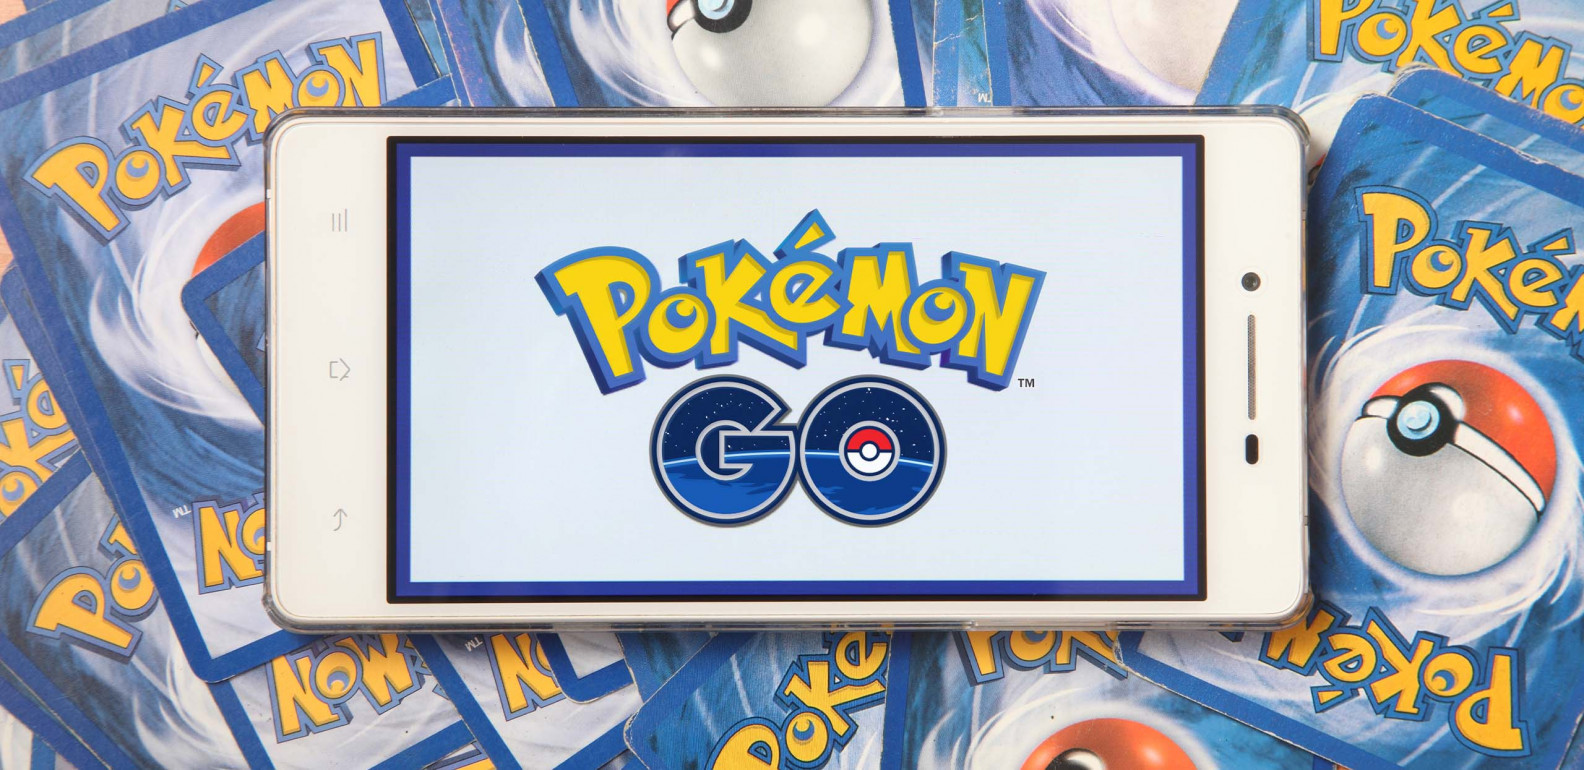 Hoe hack je Pokémon GO vanuit huis